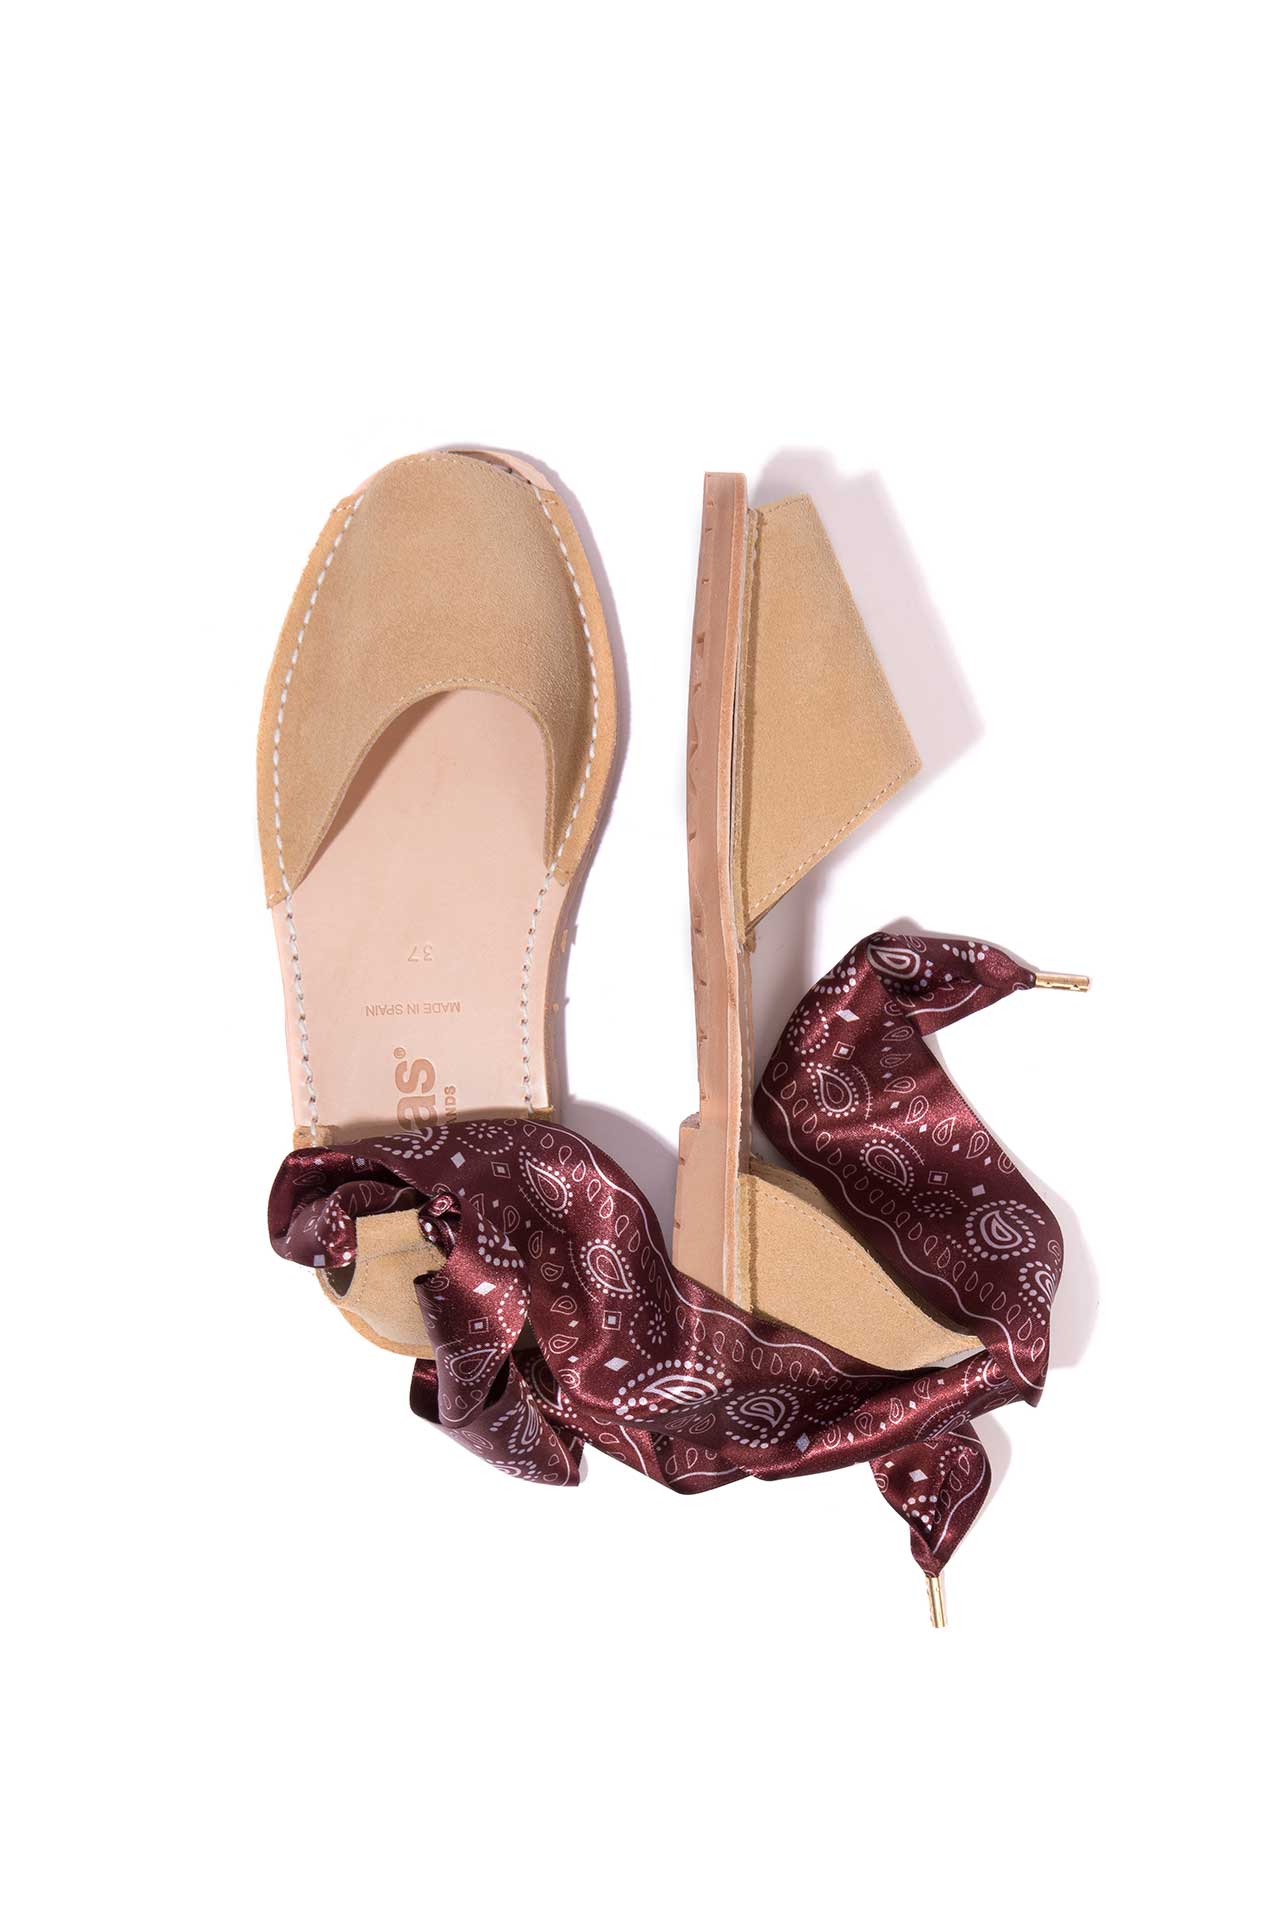 Pradera Curva - Ankle Wrap sandals